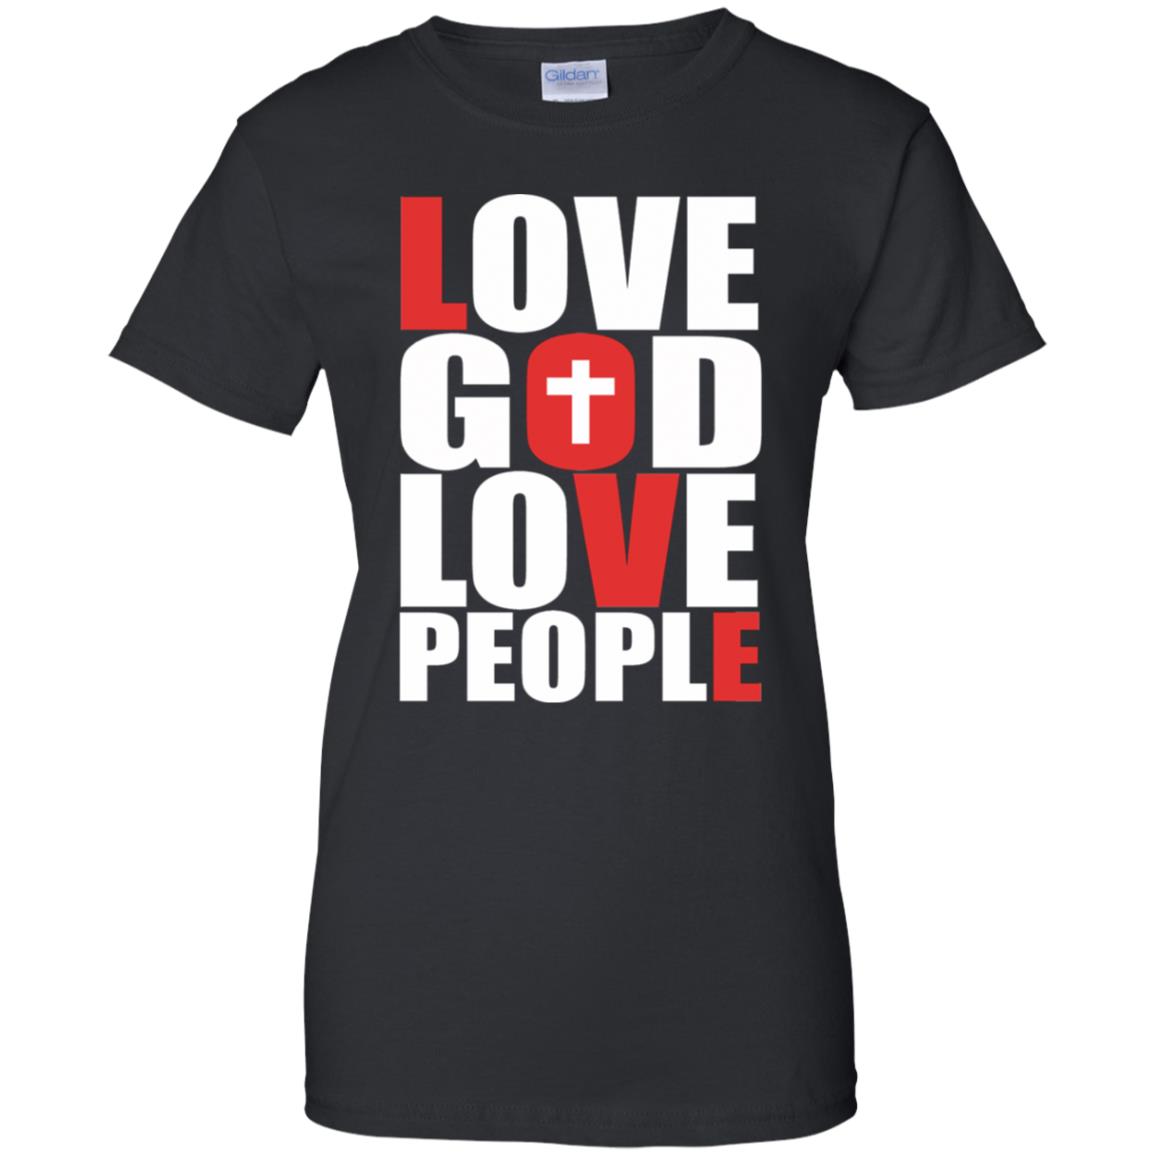 Love God Love People Shirts - 10% Off - FavorMerch